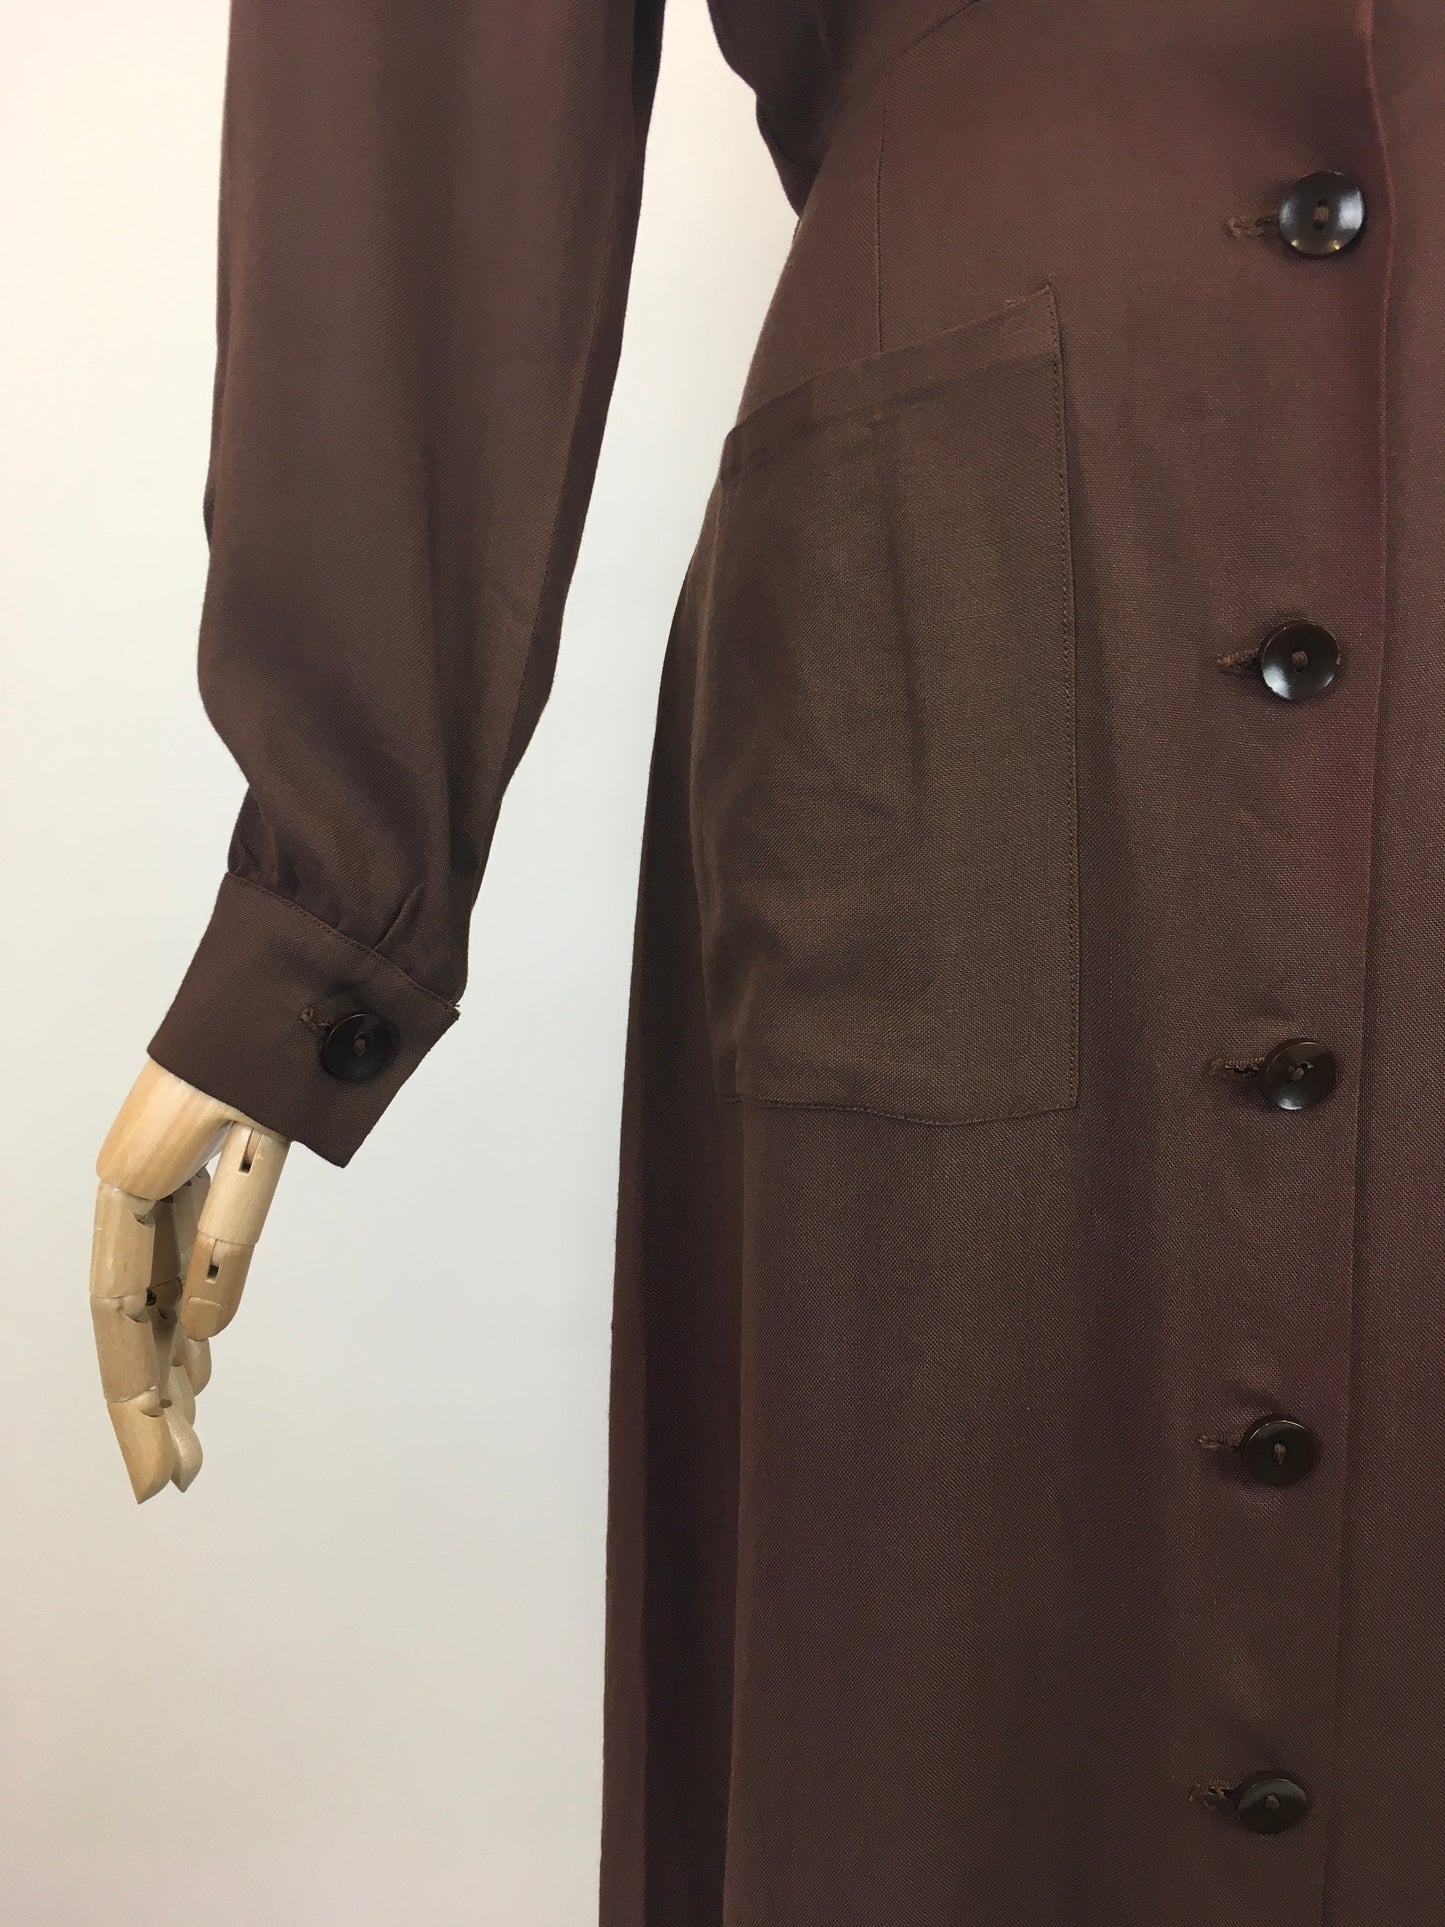 Original 1940’s DEADSTOCK CC41 Cotton Linen Dress in Chocolate Brown - With Original Shop Labels